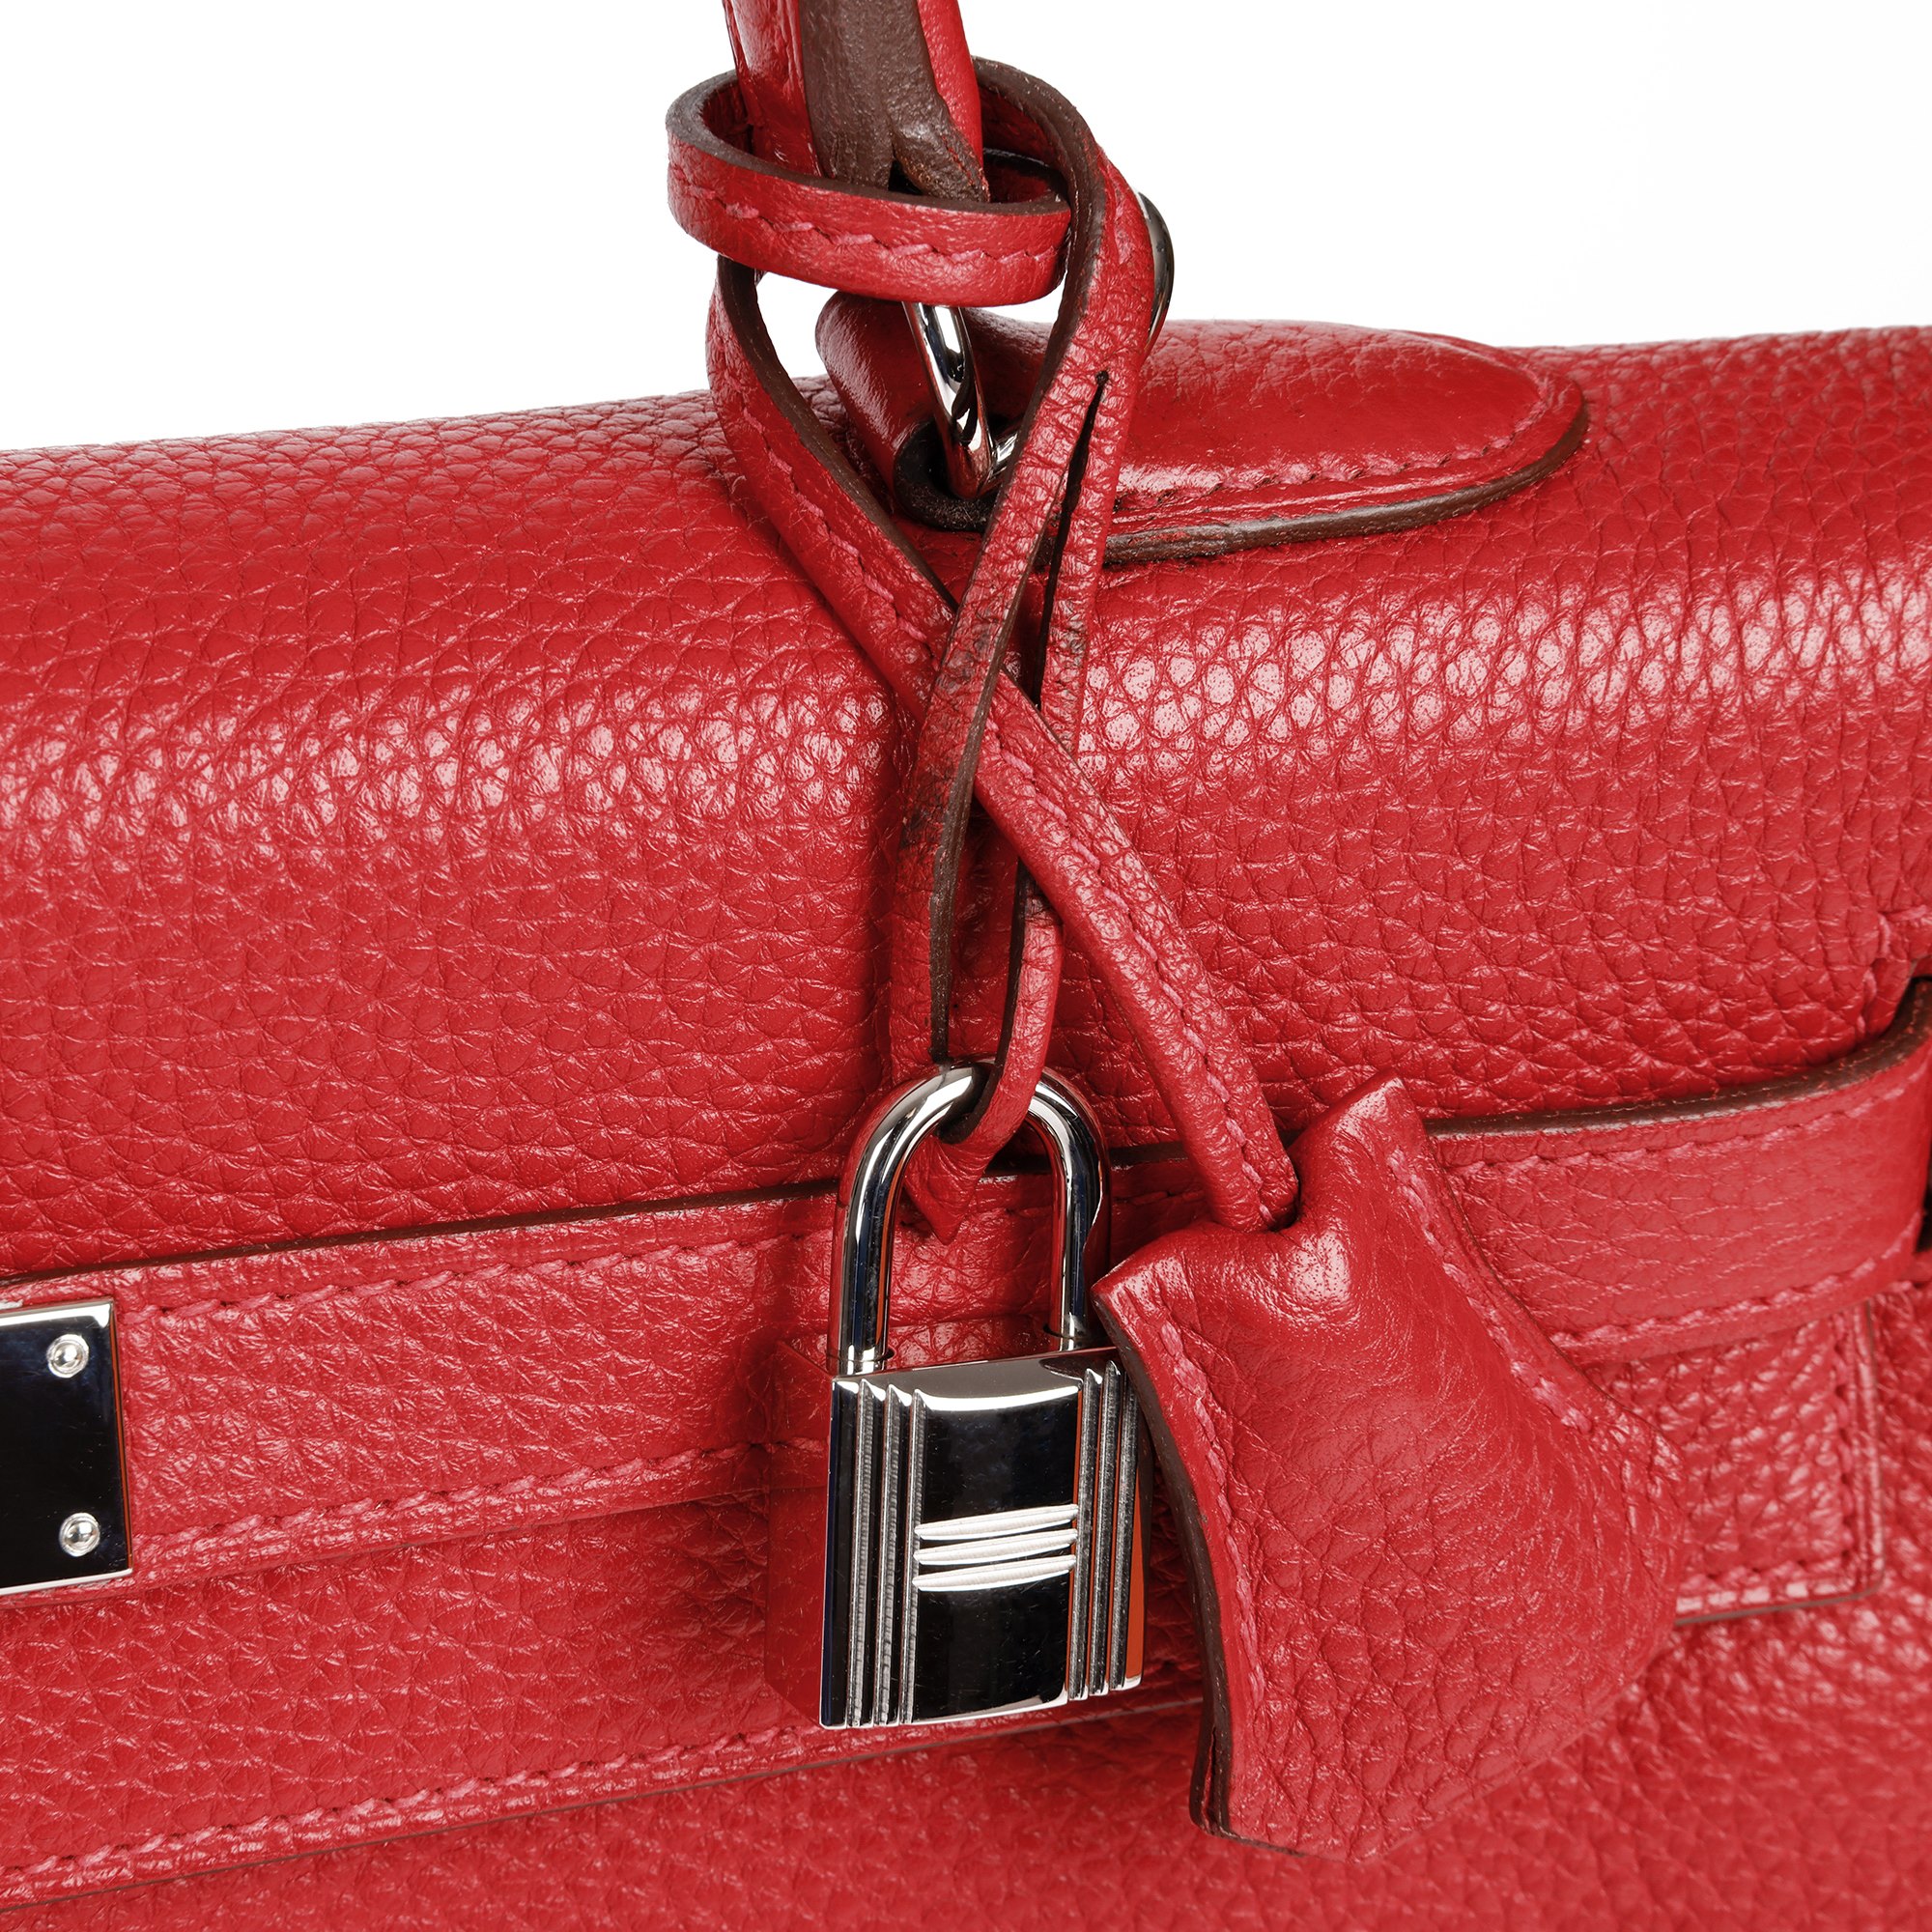 Hermès Rouge Casaque Togo Leather Kelly 35cm Retourne